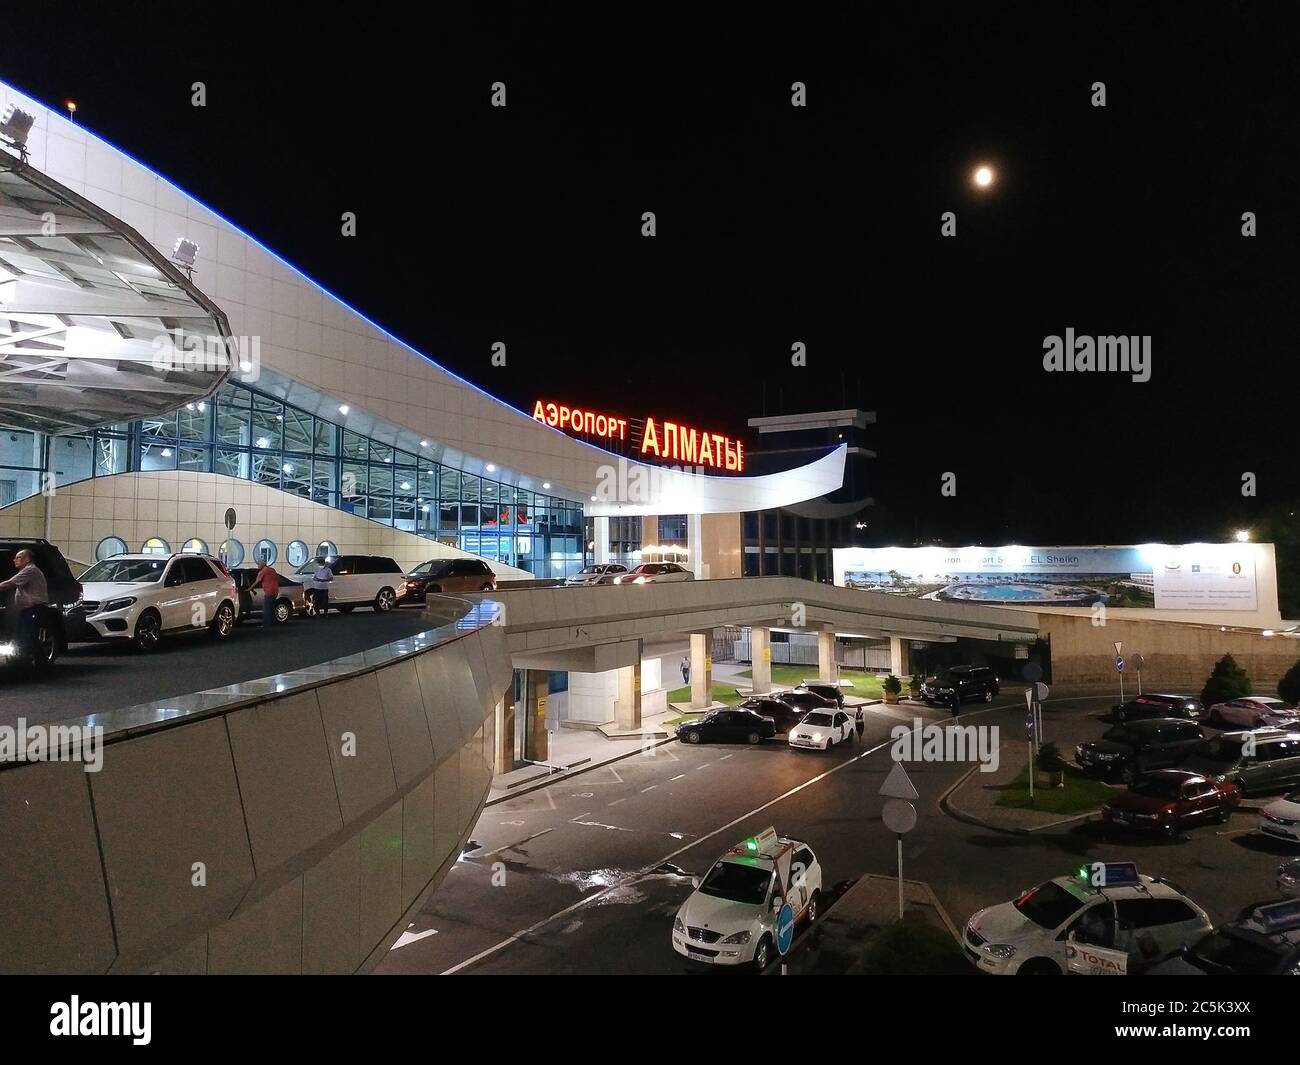 Almaty, Kazakhstan - 22 giugno 2019: Architettura aeroportuale di Almaty. L'aeroporto di Almaty è il più grande aeroporto internazionale del Kazakistan. Foto Stock